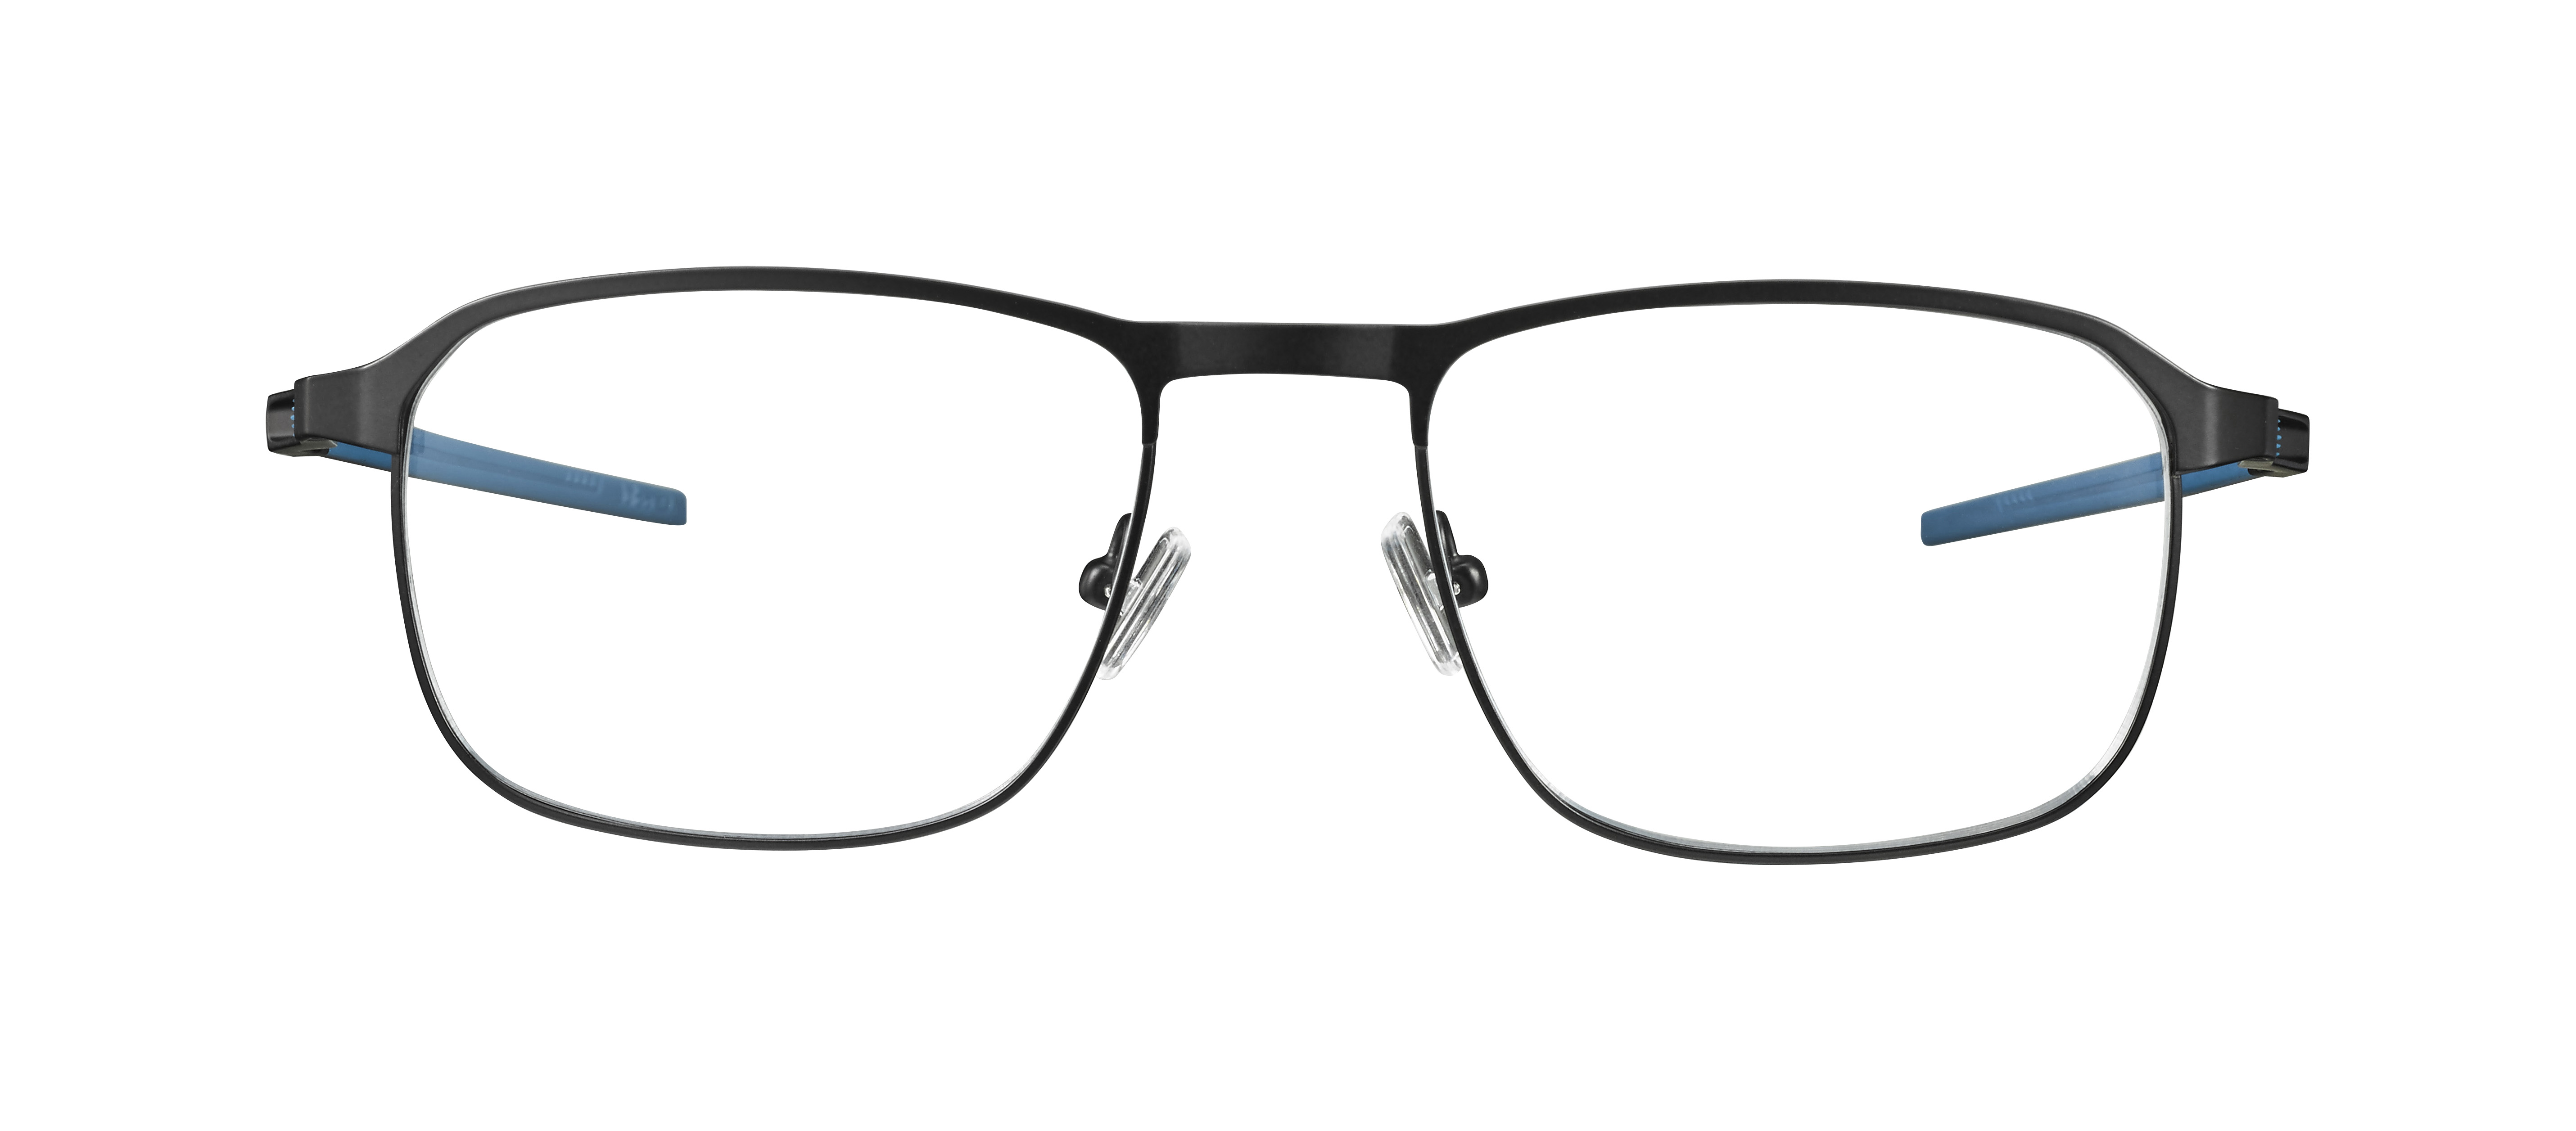 Glasses Julbo Op1401 foster, black colour - Doyle